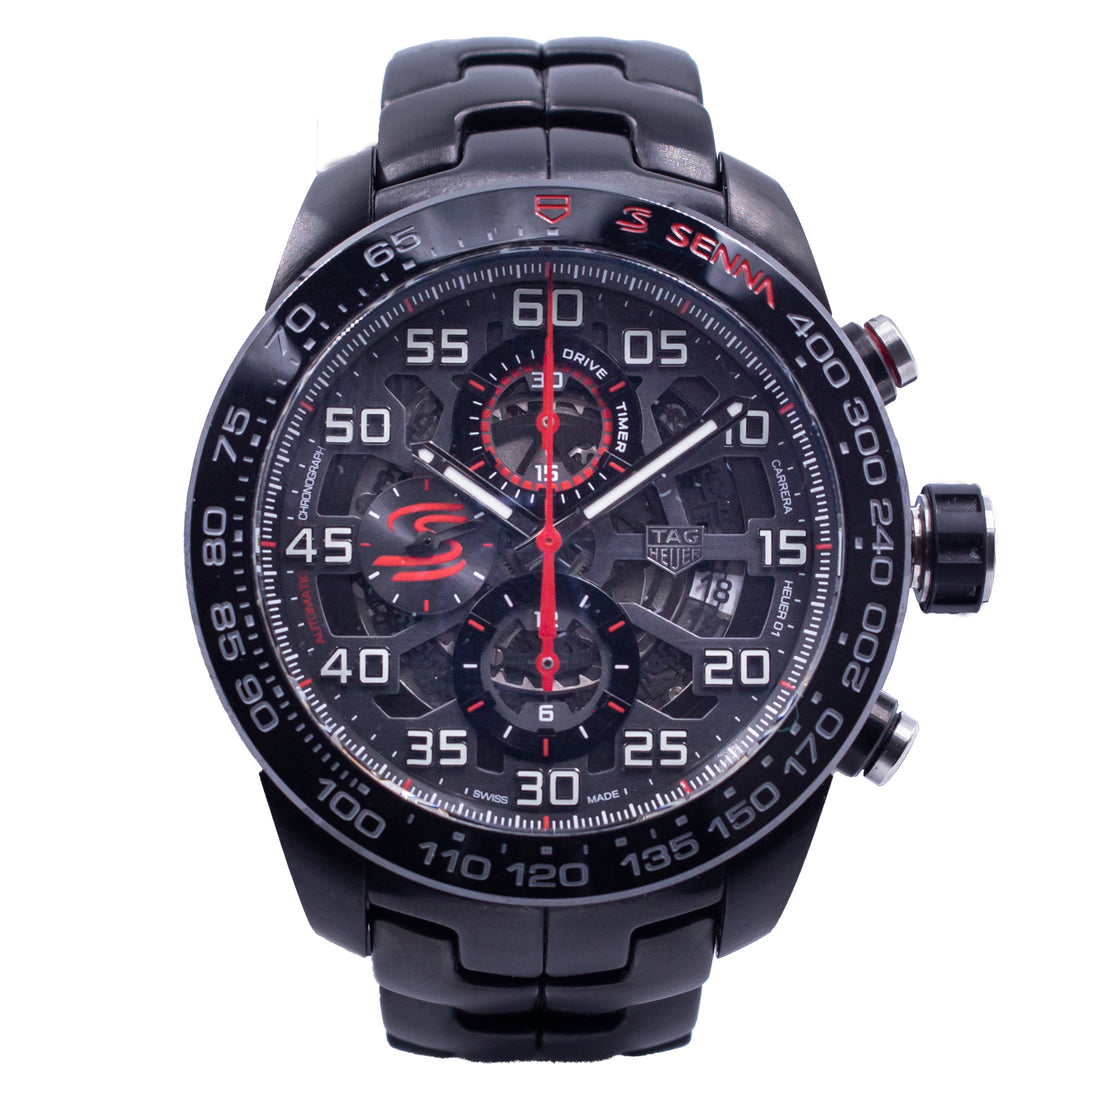 Reloj Tag Heuer Carrera Senna Special Edition